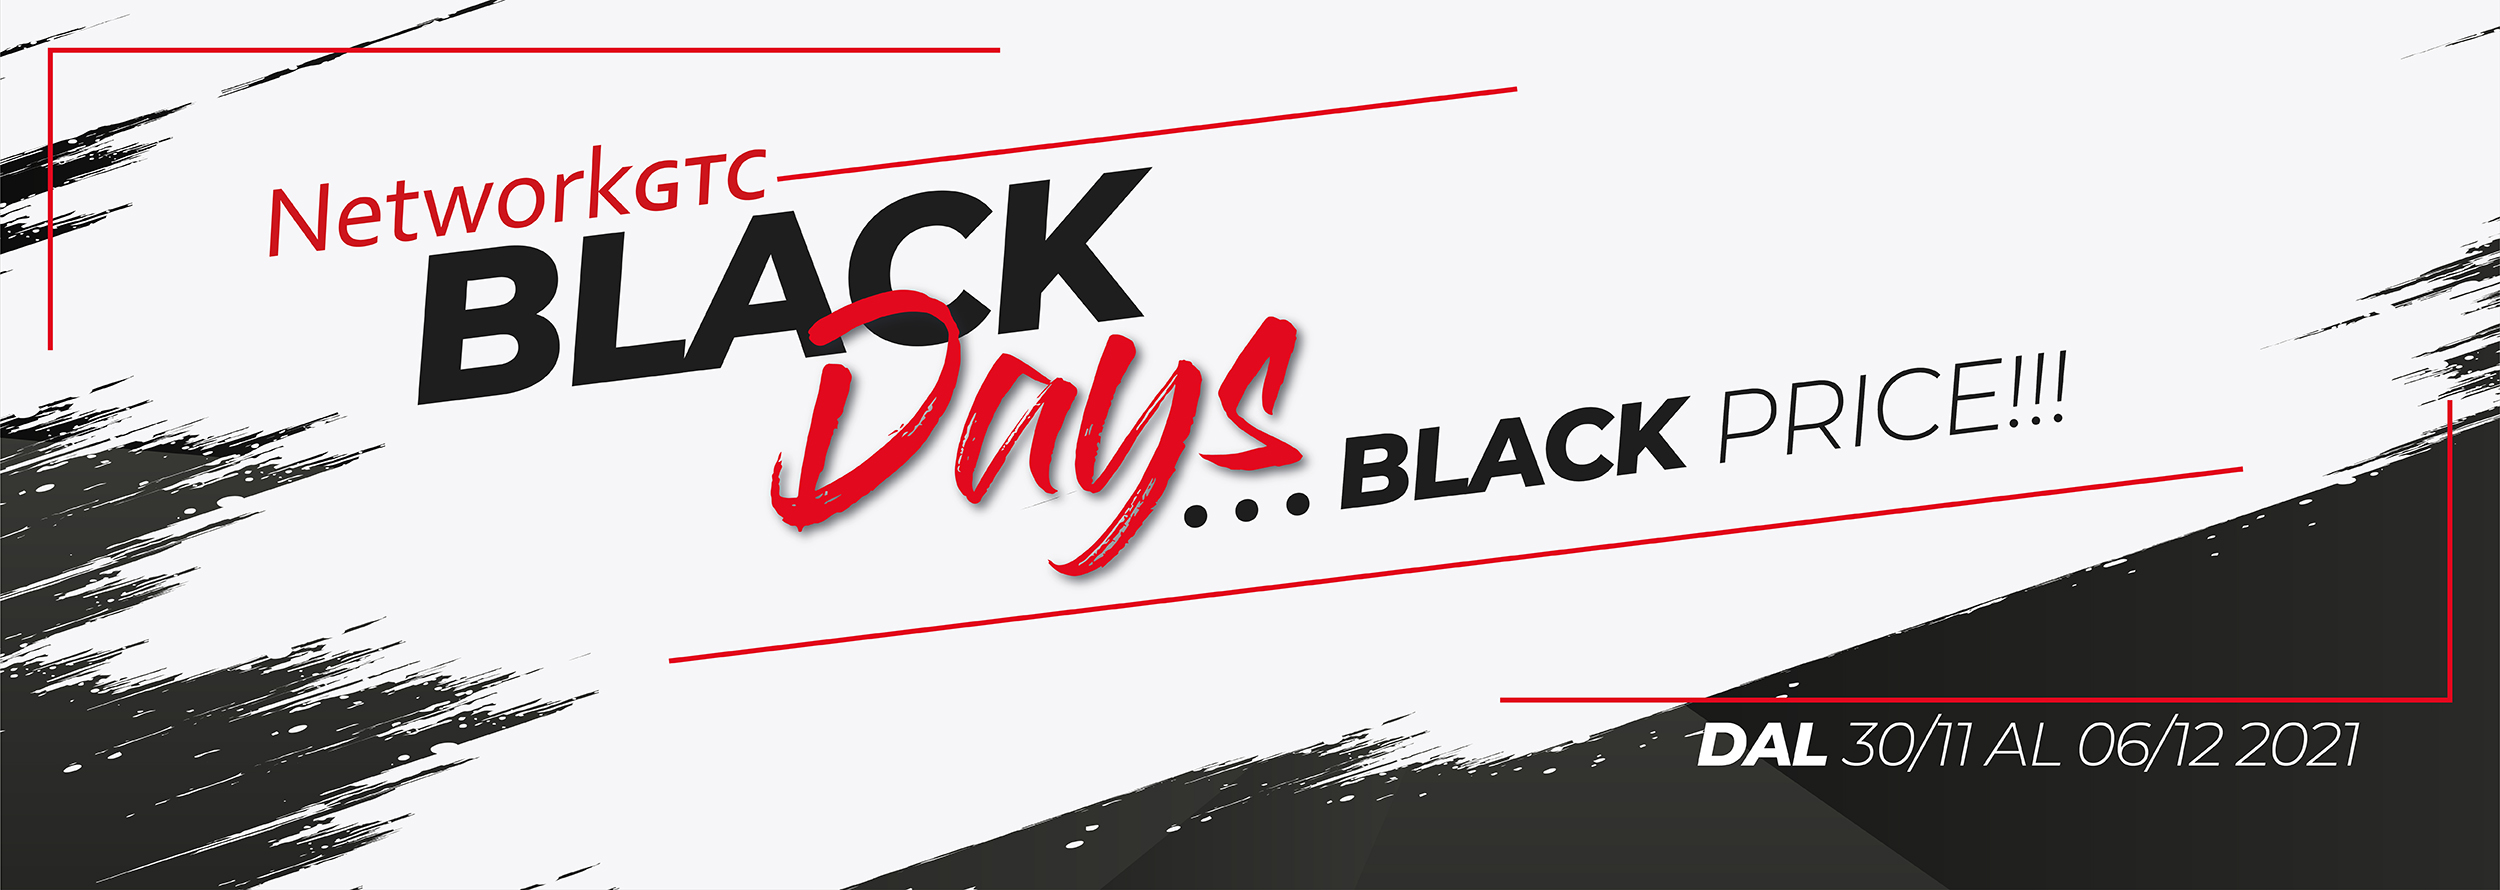 Black Friday Black days Black price